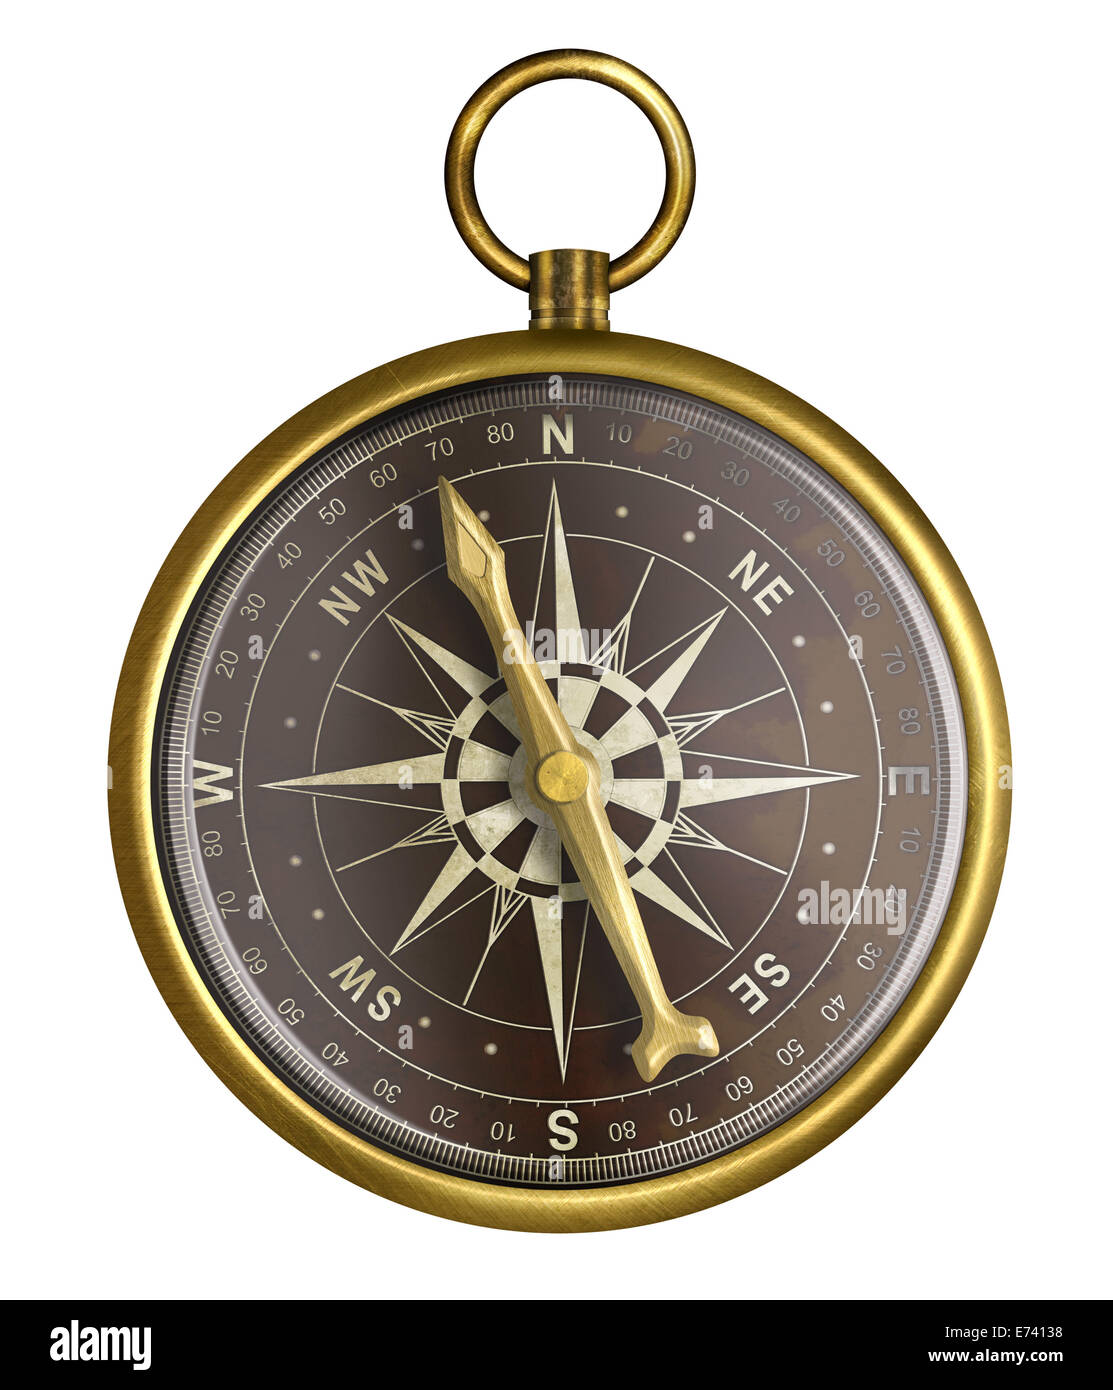 Goldene oder Messing alt nautischen Kompass illustration Stockfoto